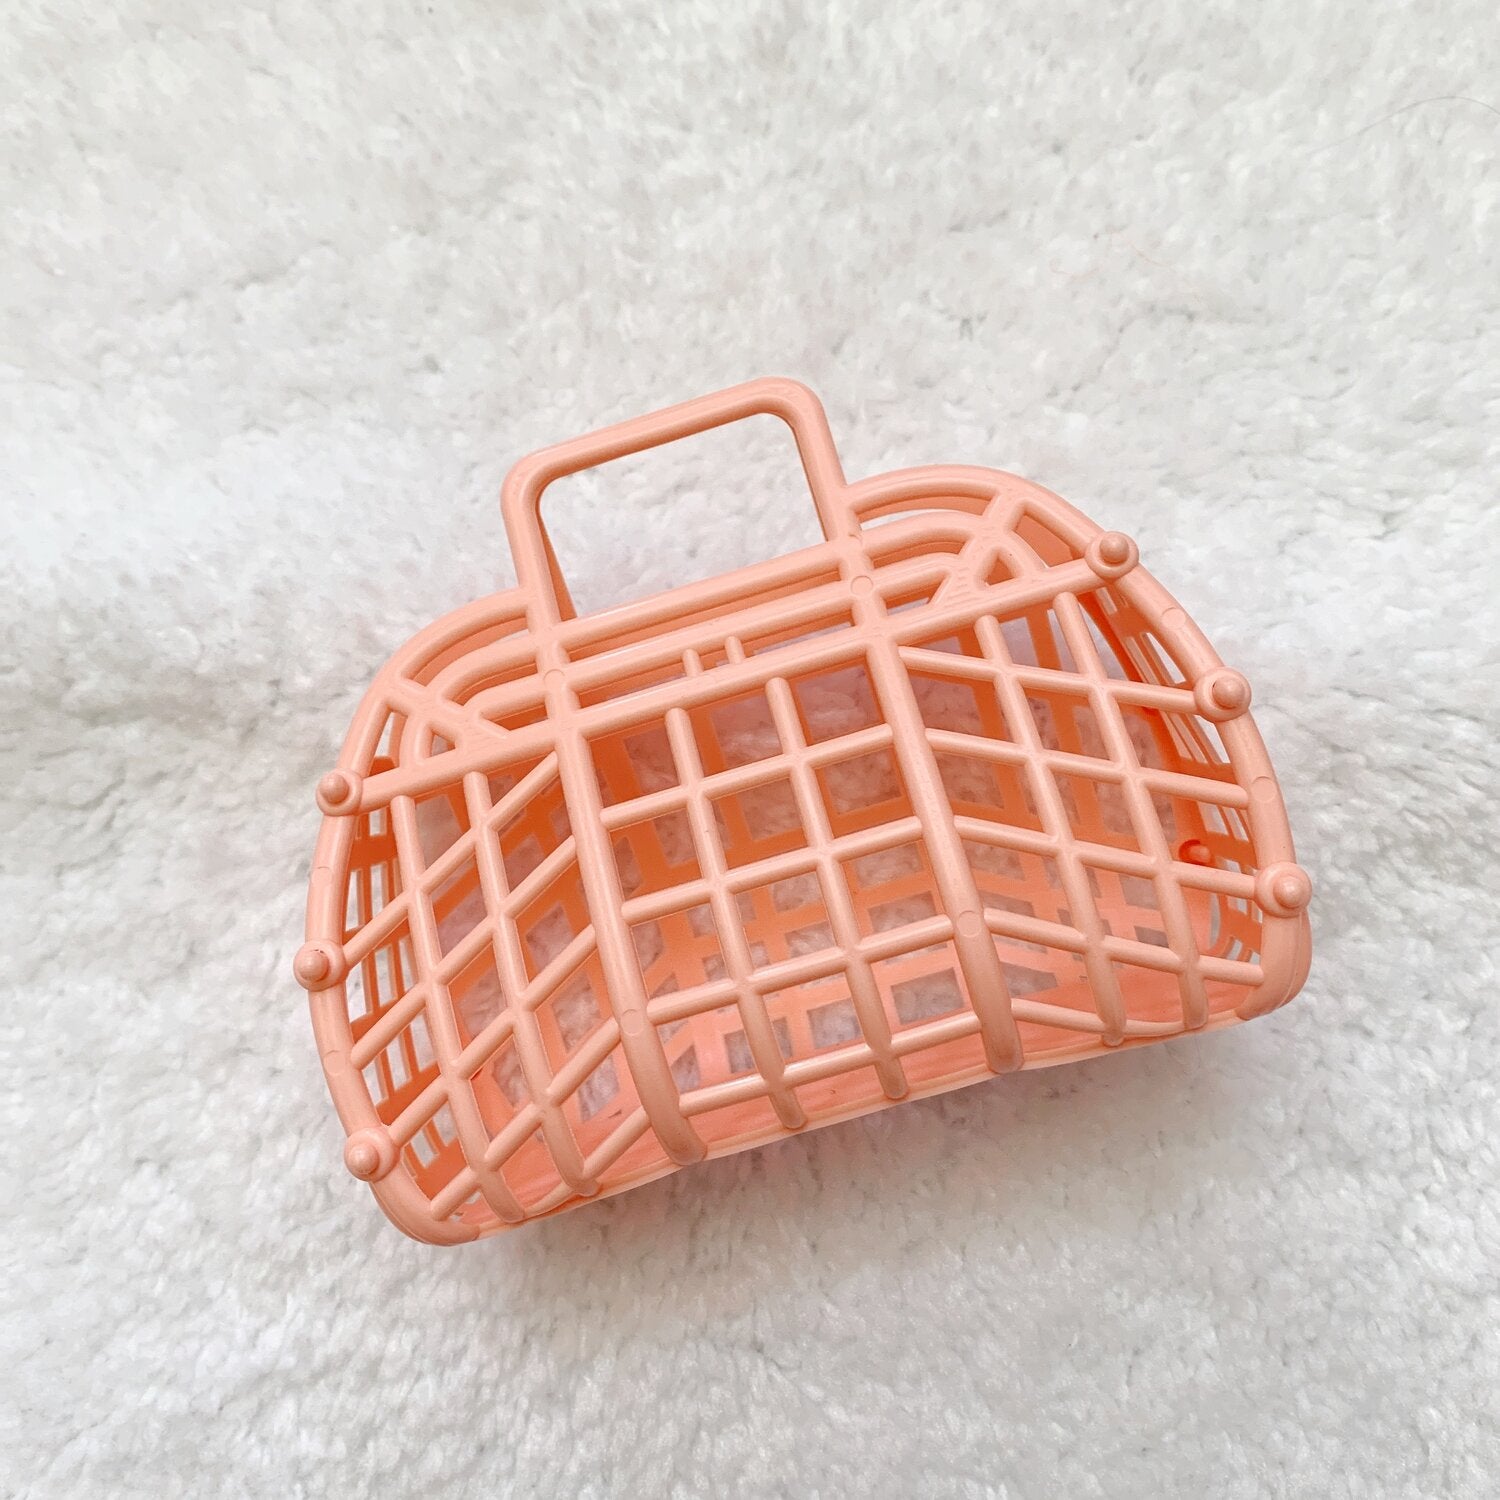 Jelly Basket Bag - CLEAR / N/A